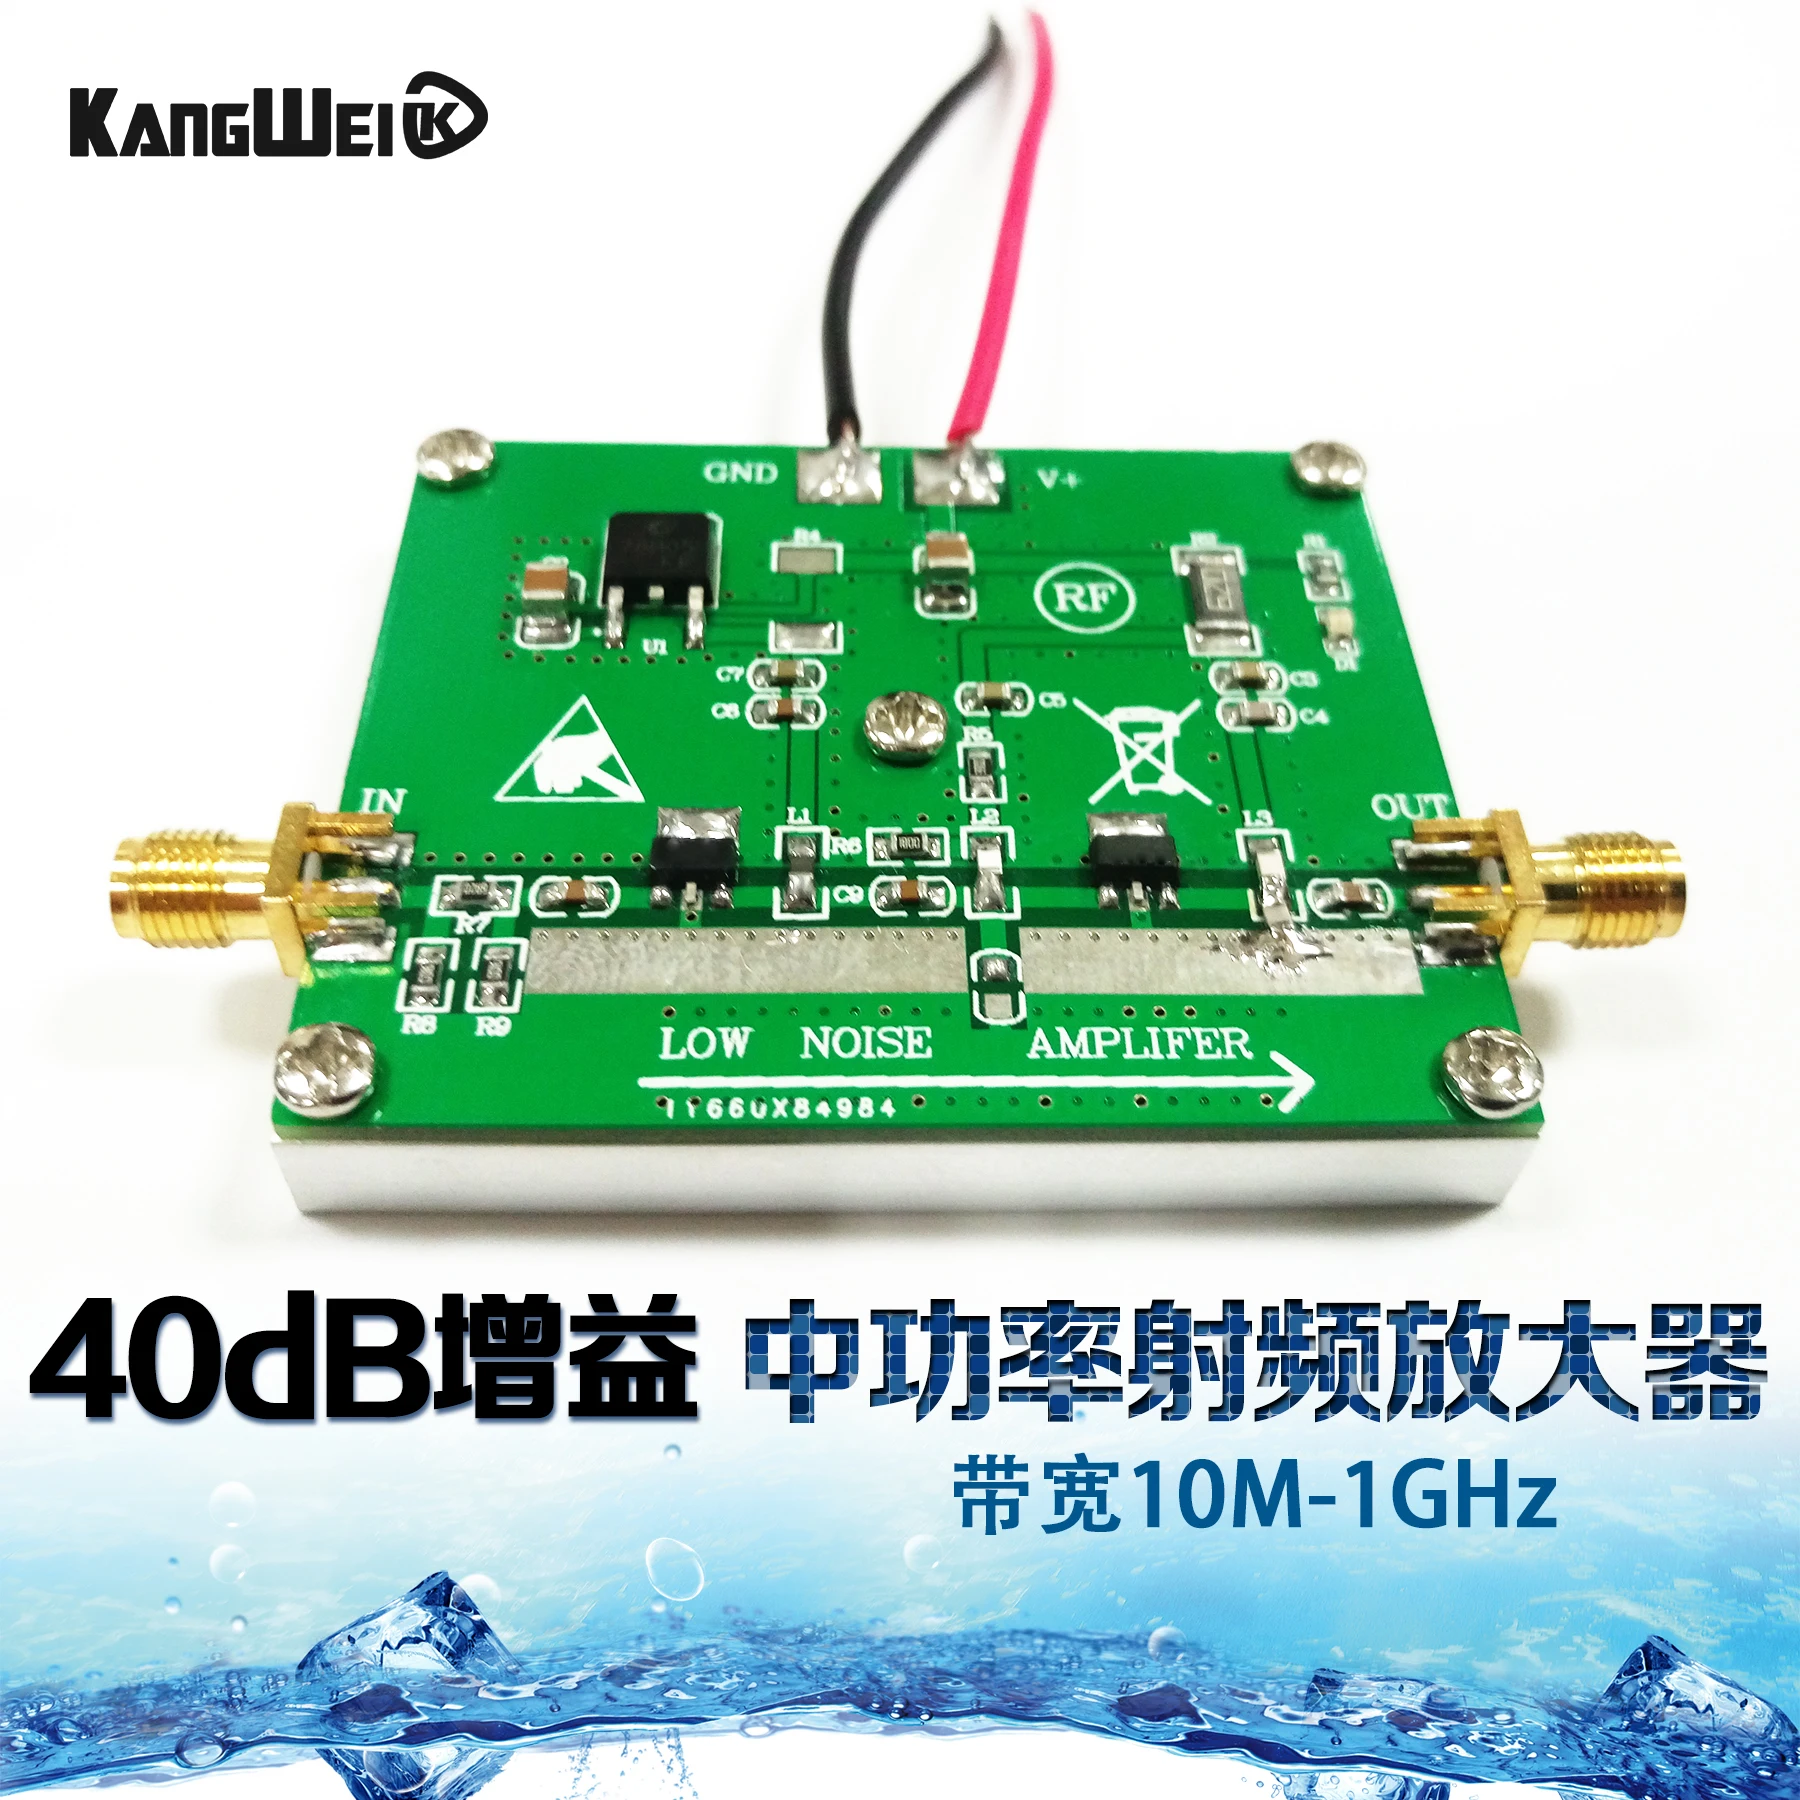 

Medium Power RF Amplifier 10M-1GHz 40dB Gain Power 1W Radio Amplifier